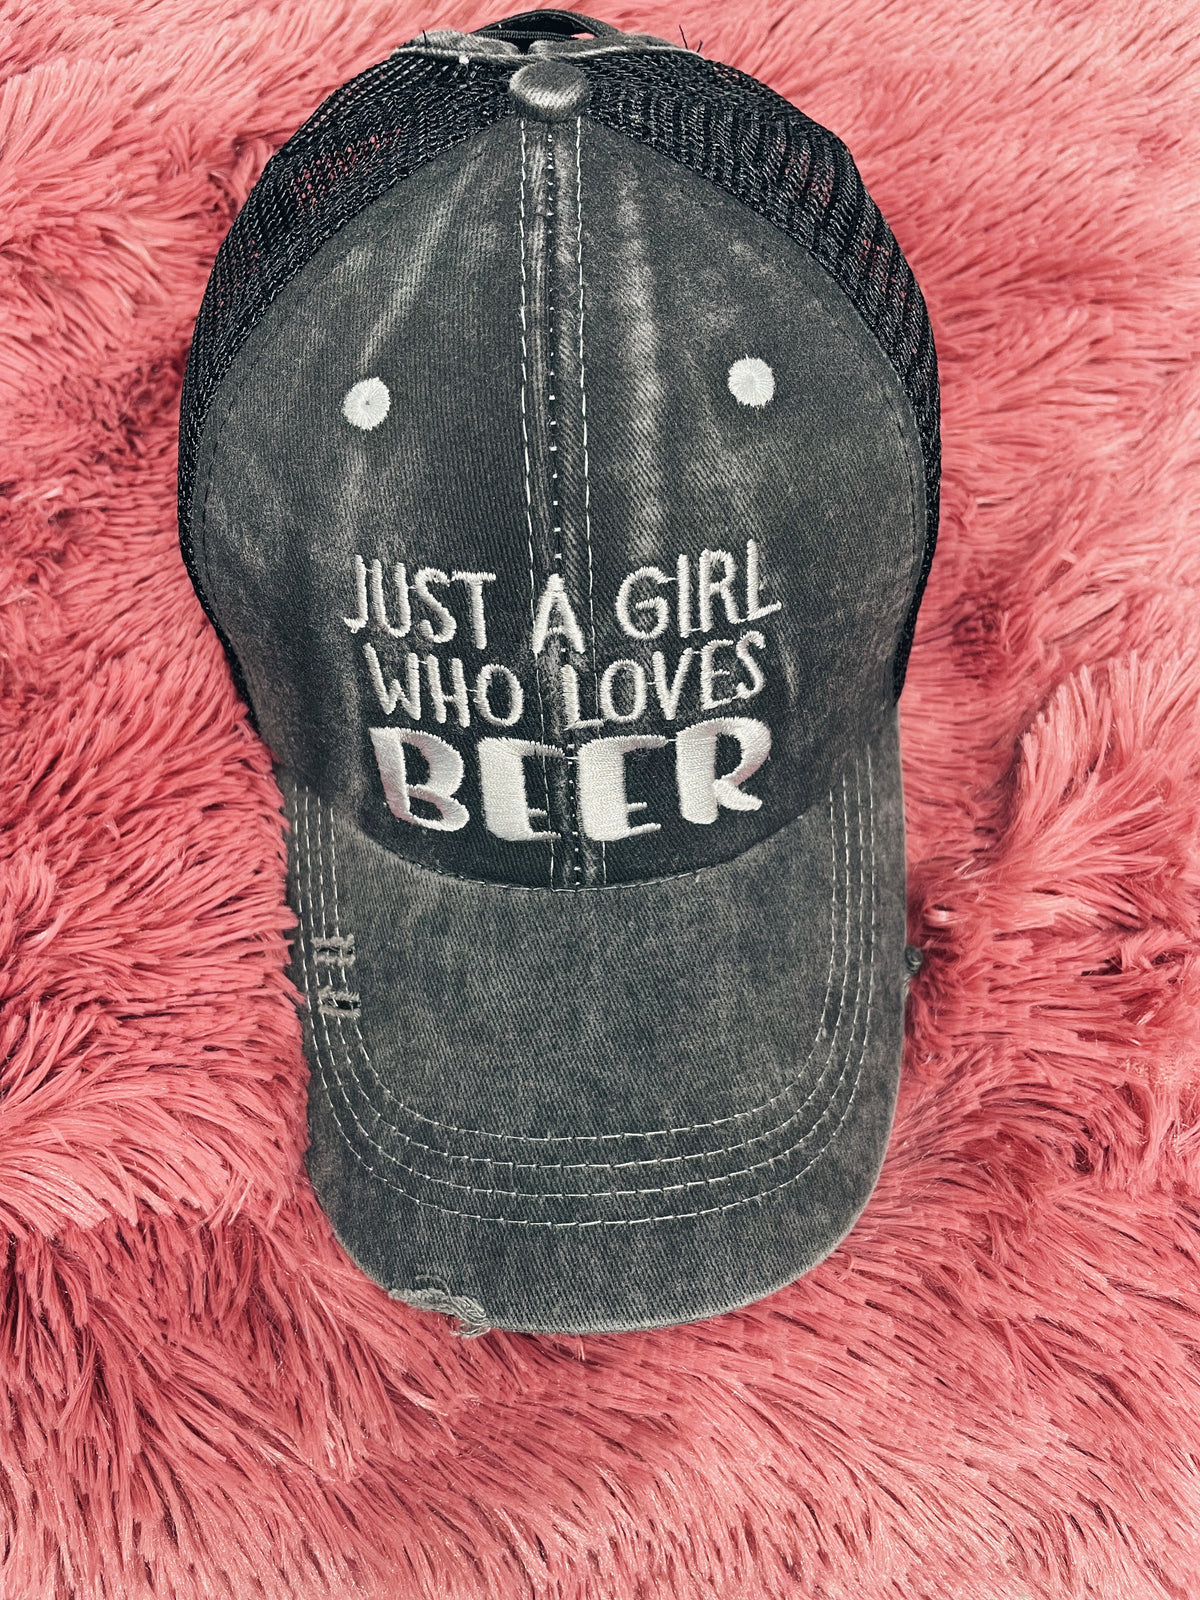 "Just a Girl Who Loves Beer" Criss Cross Baseball Cap